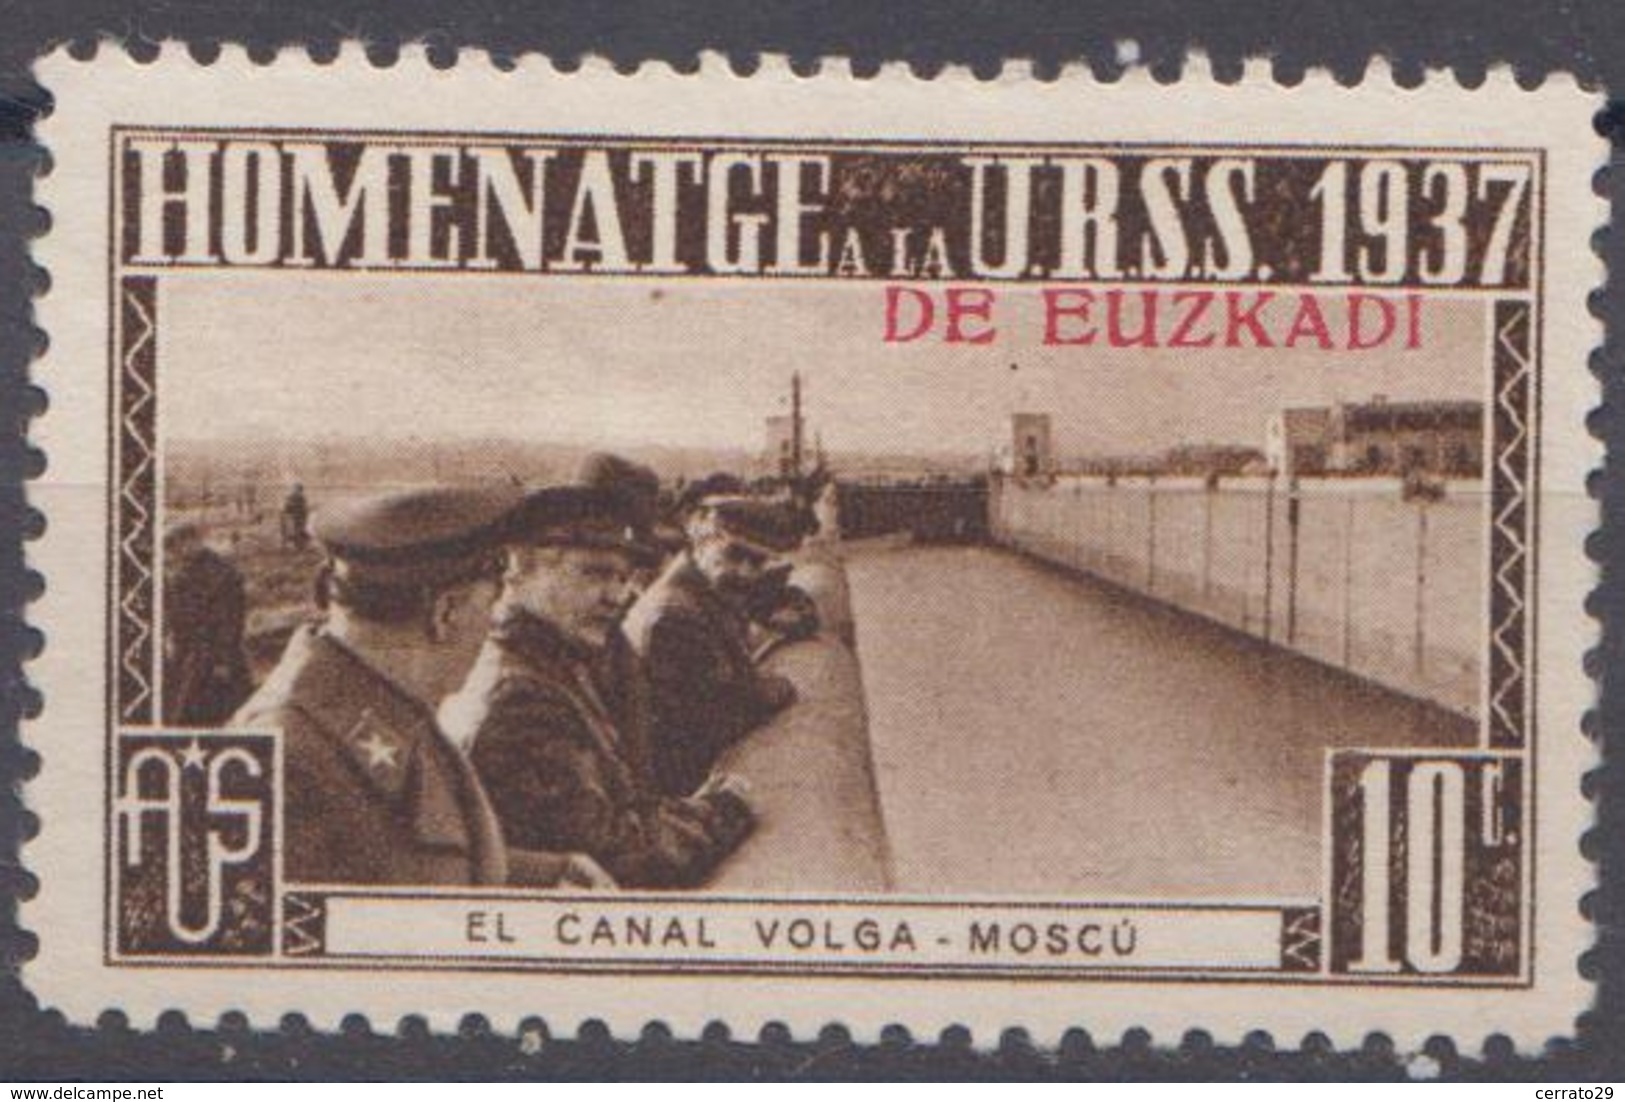 HOMENAJE A LA U.R.S.S. 1937 - EUZKADI - Spanish Civil War Labels